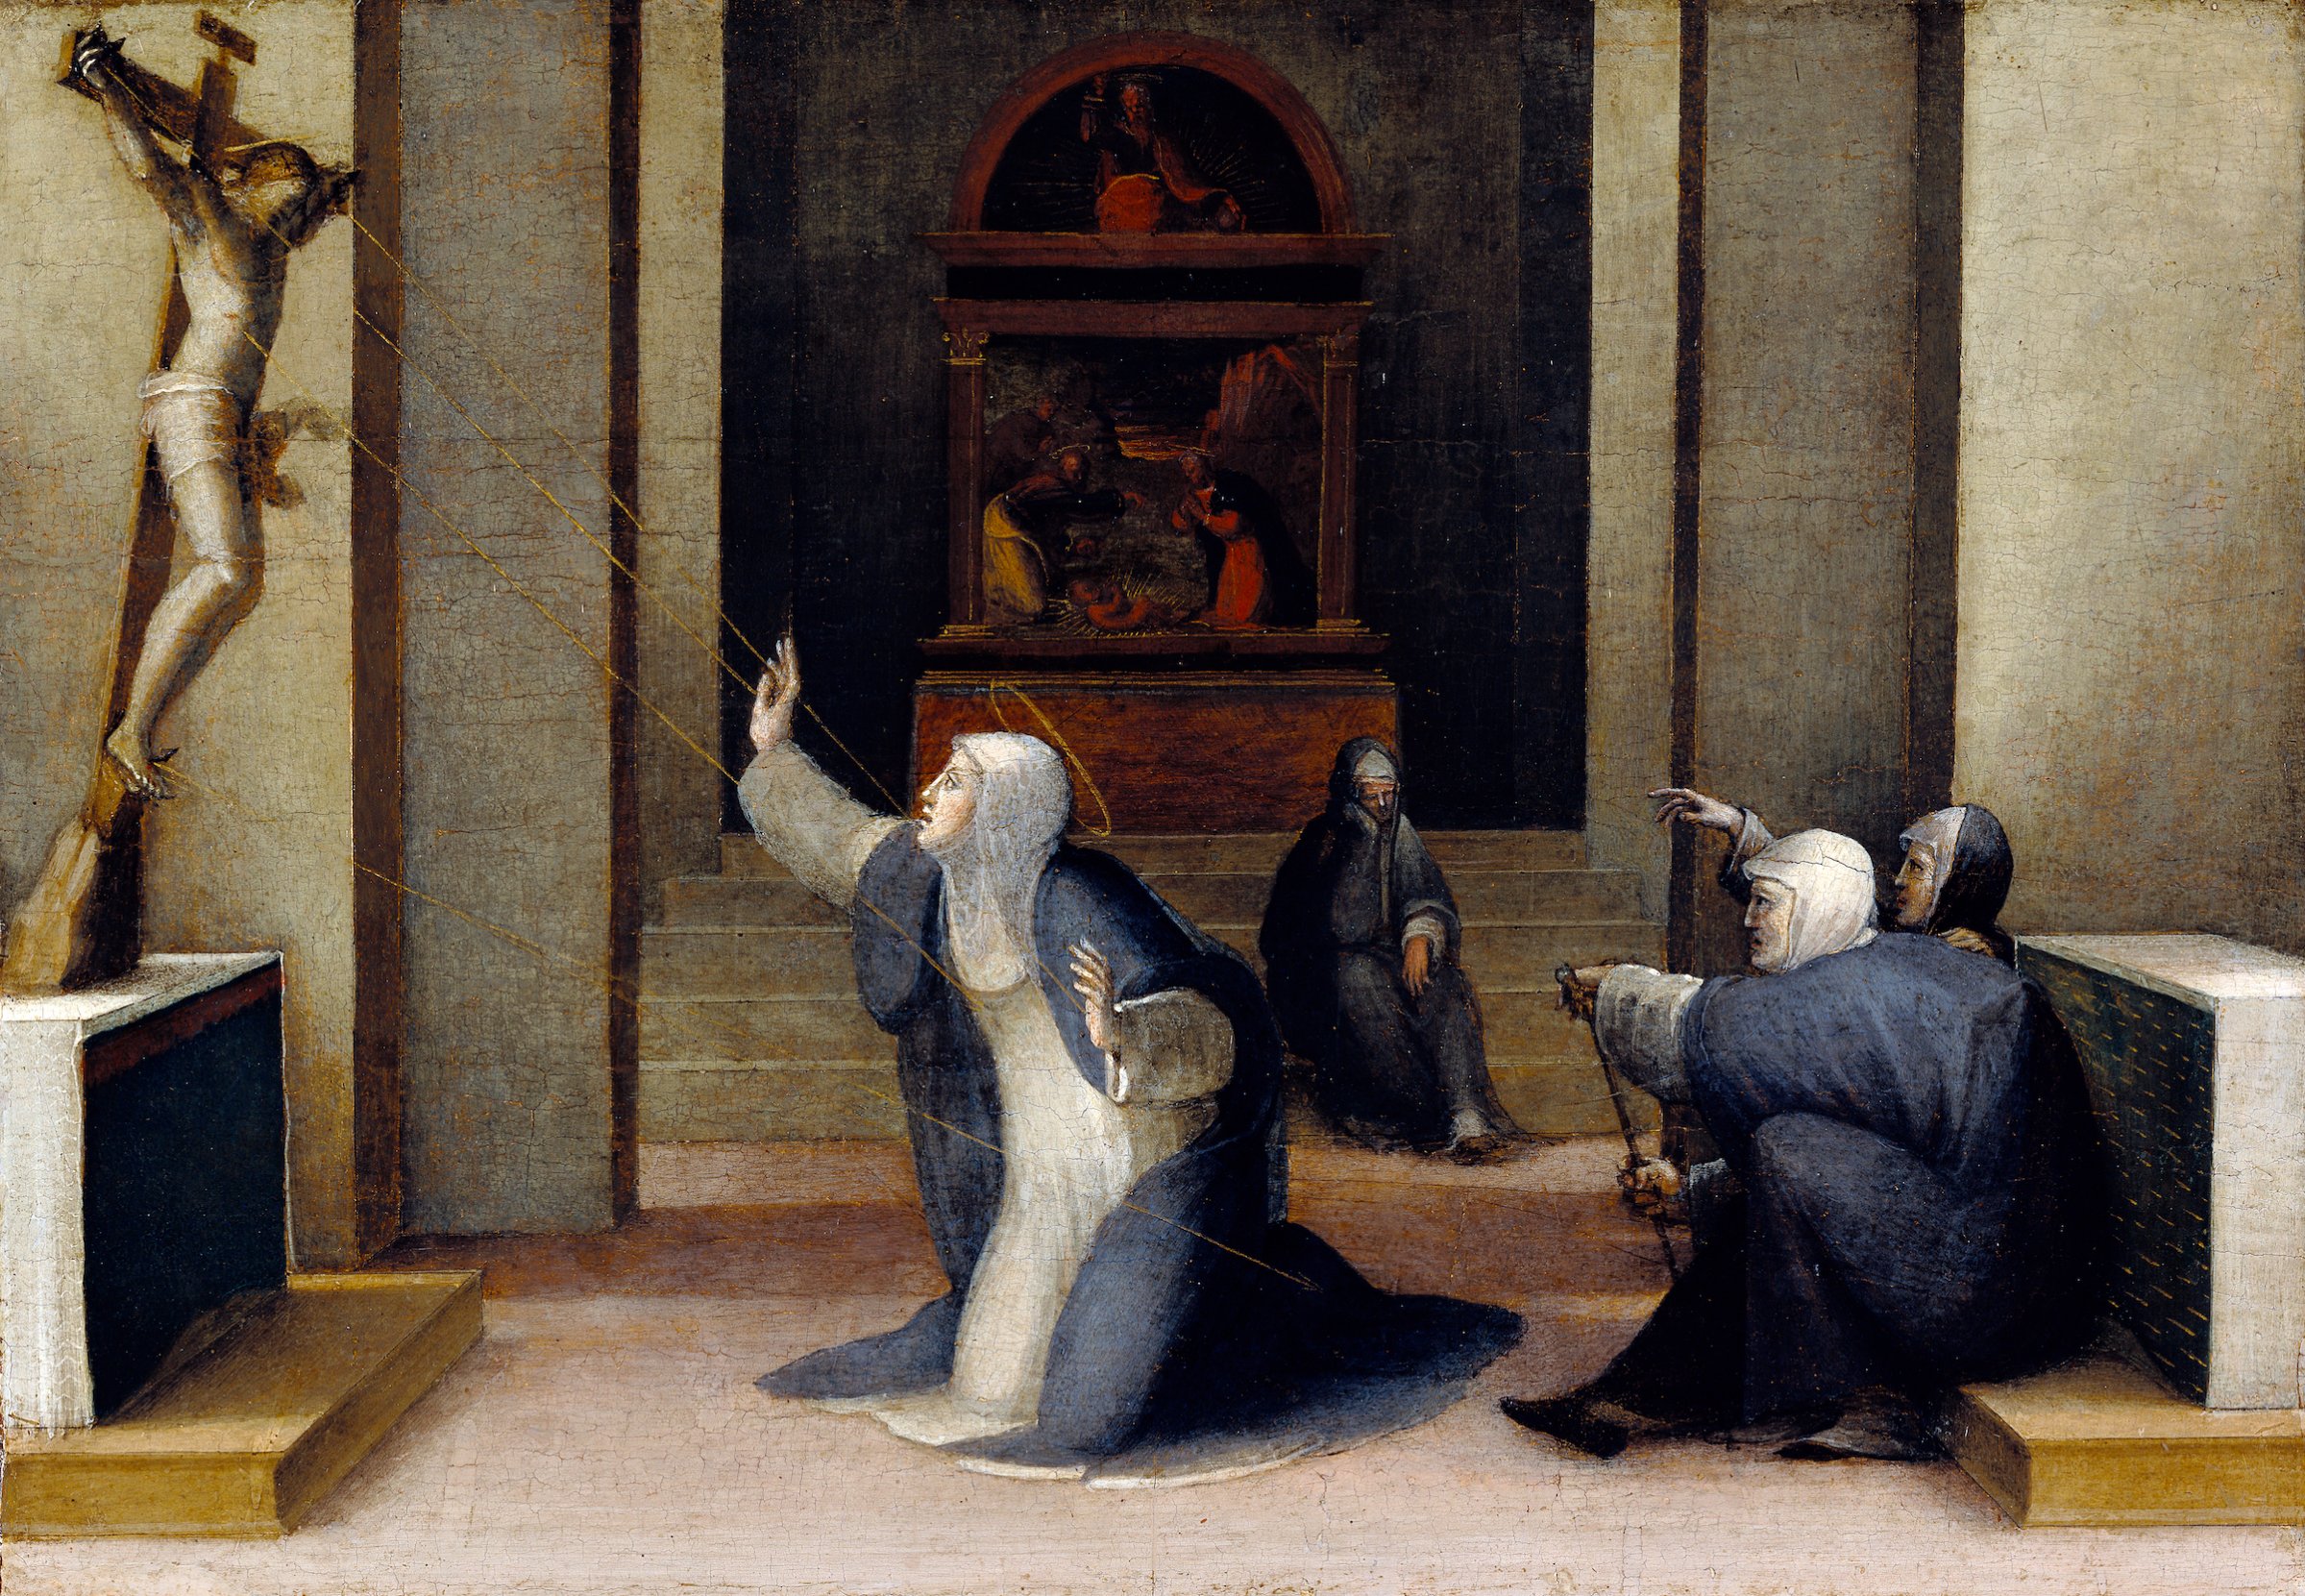 Saint Catherine of Siena Receiving the Stigmata by Domenico Beccafumi